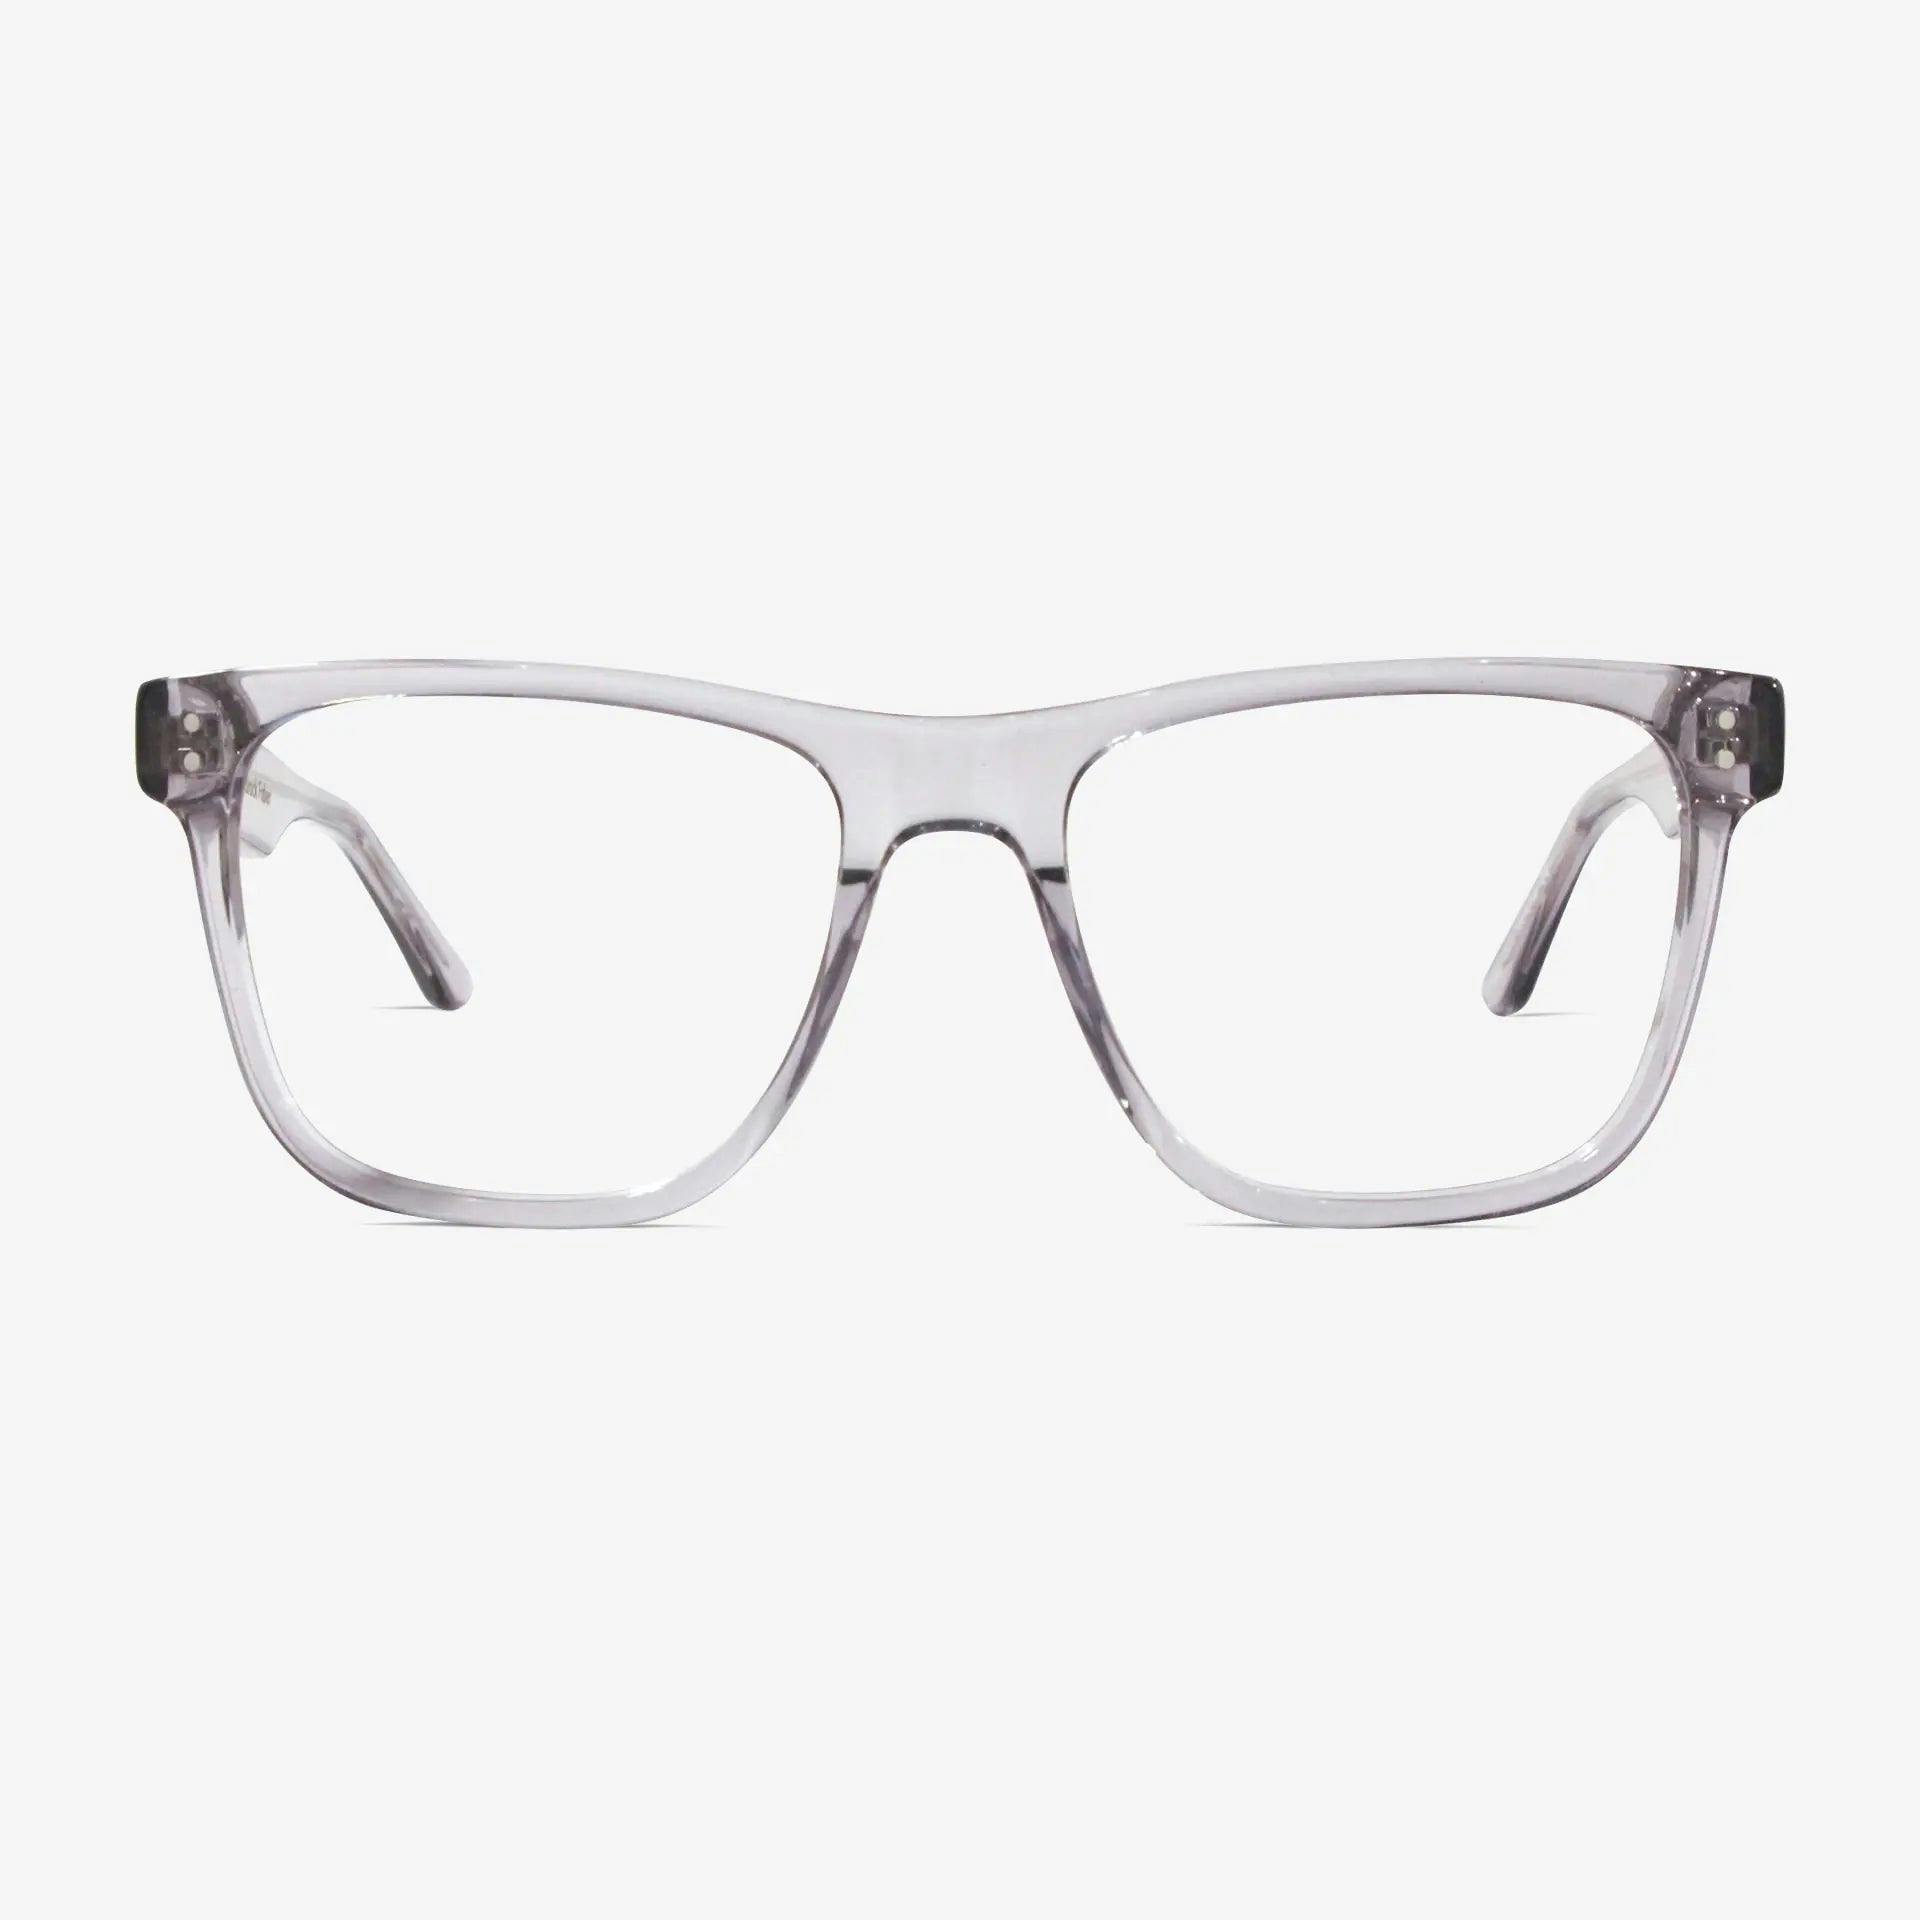 Huxley glasses | Fabes Slate 